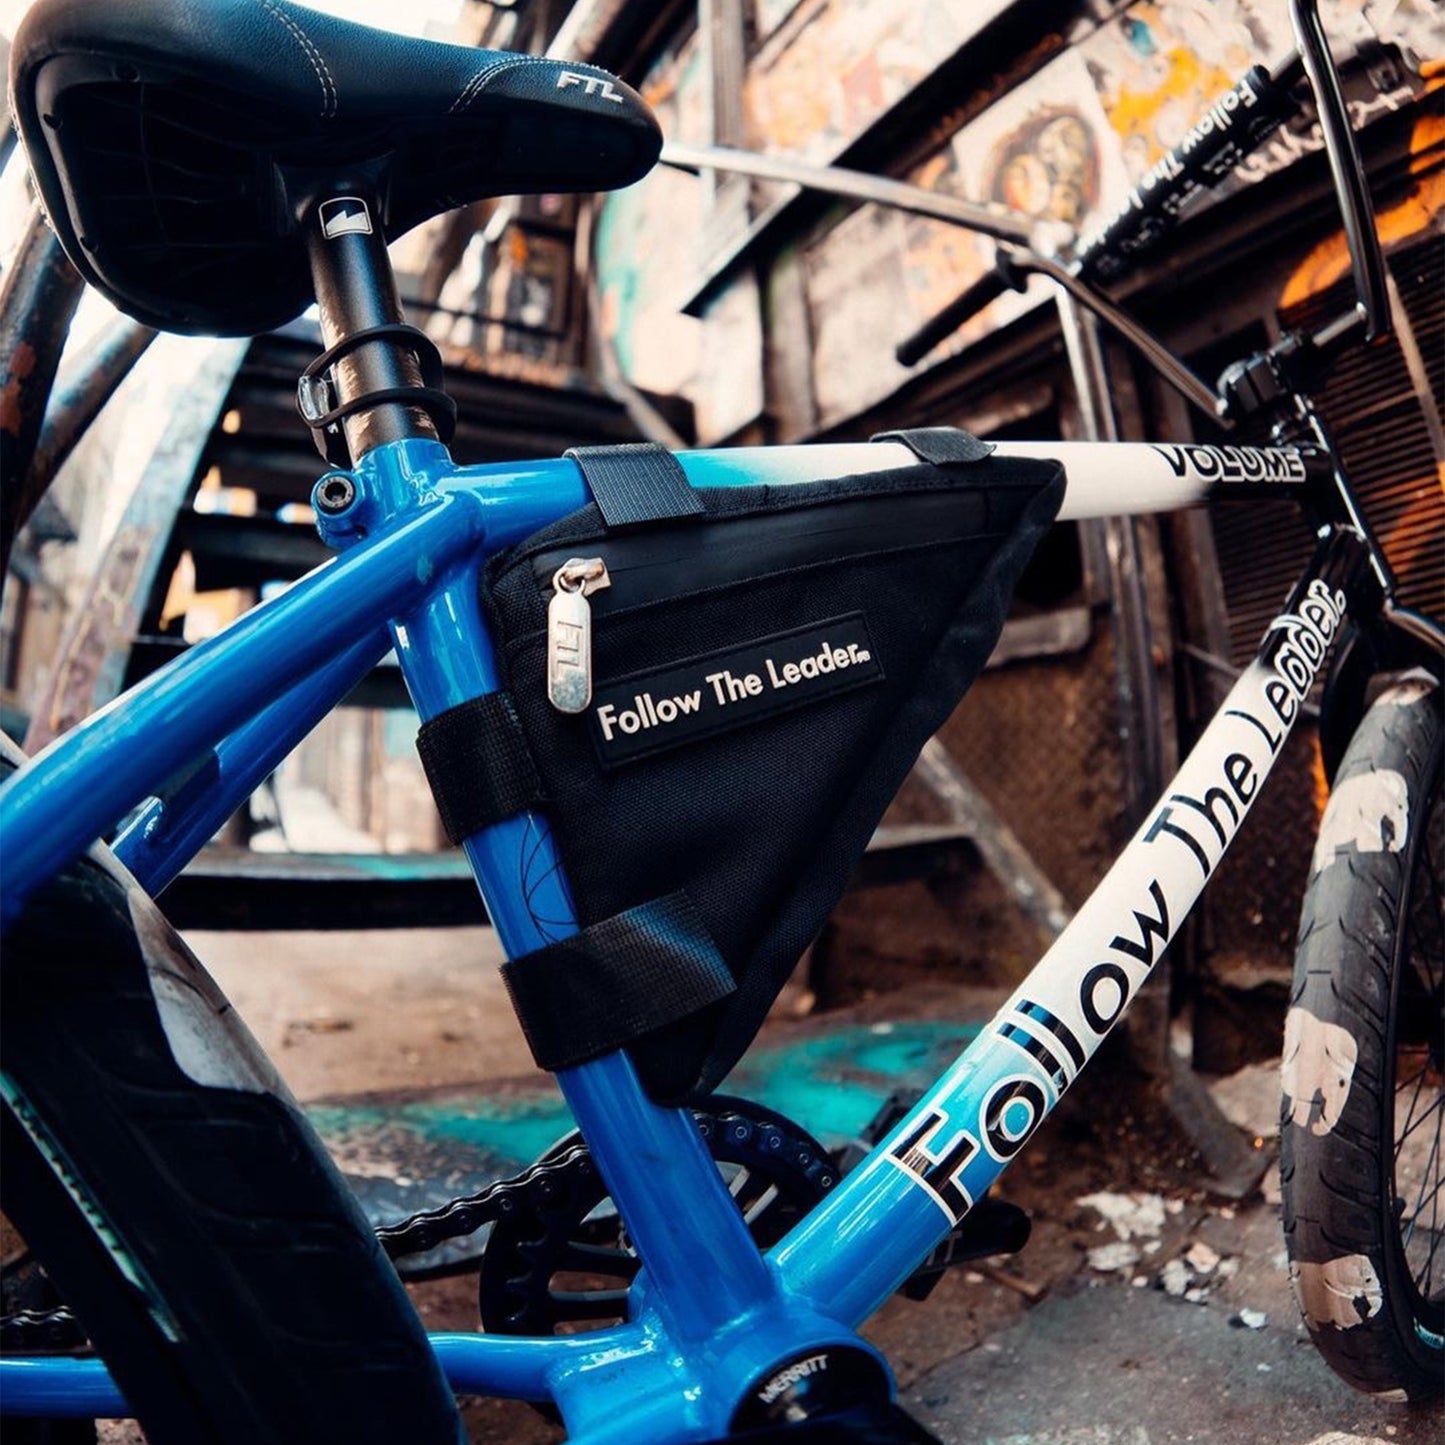 FTL - Bicycle Frame Bag